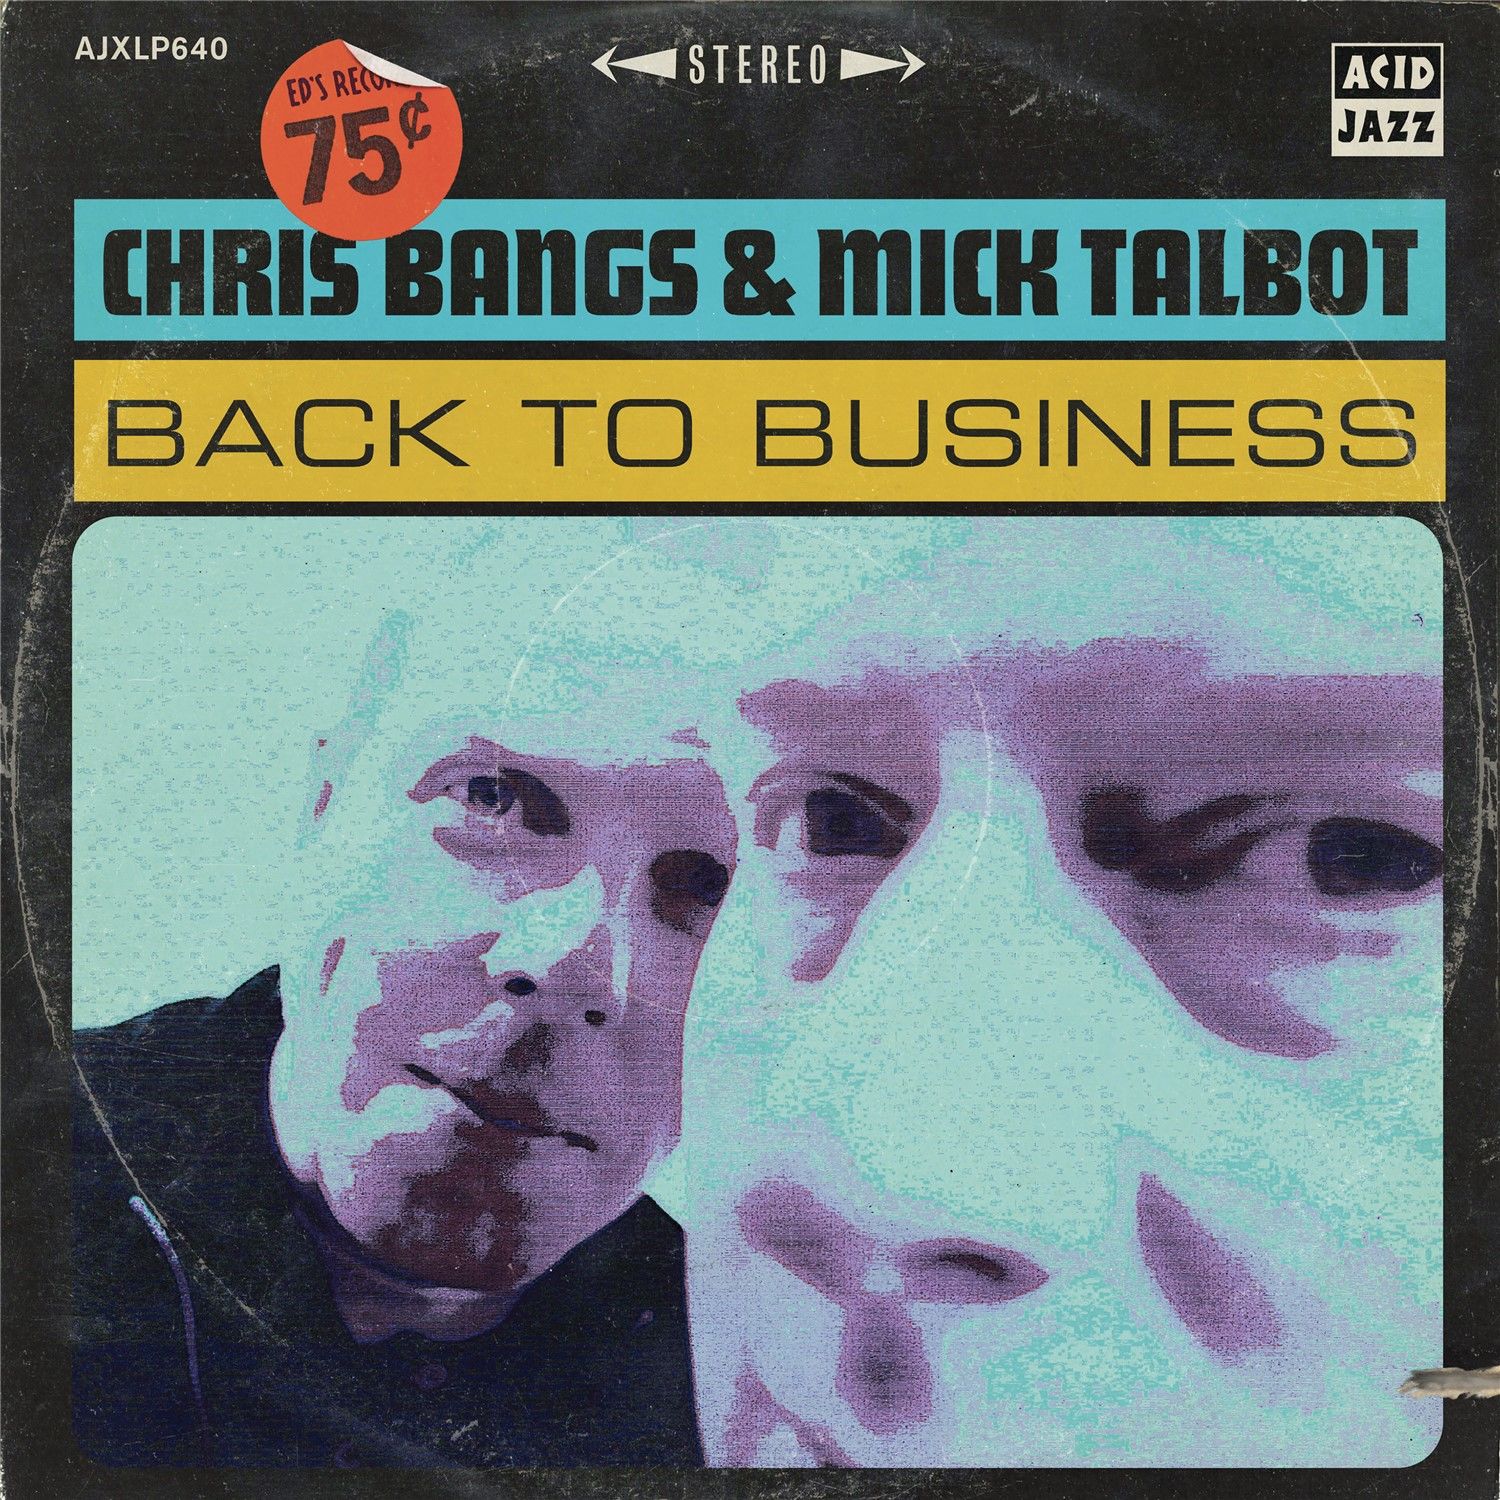 Back To Business: Vinyl LP